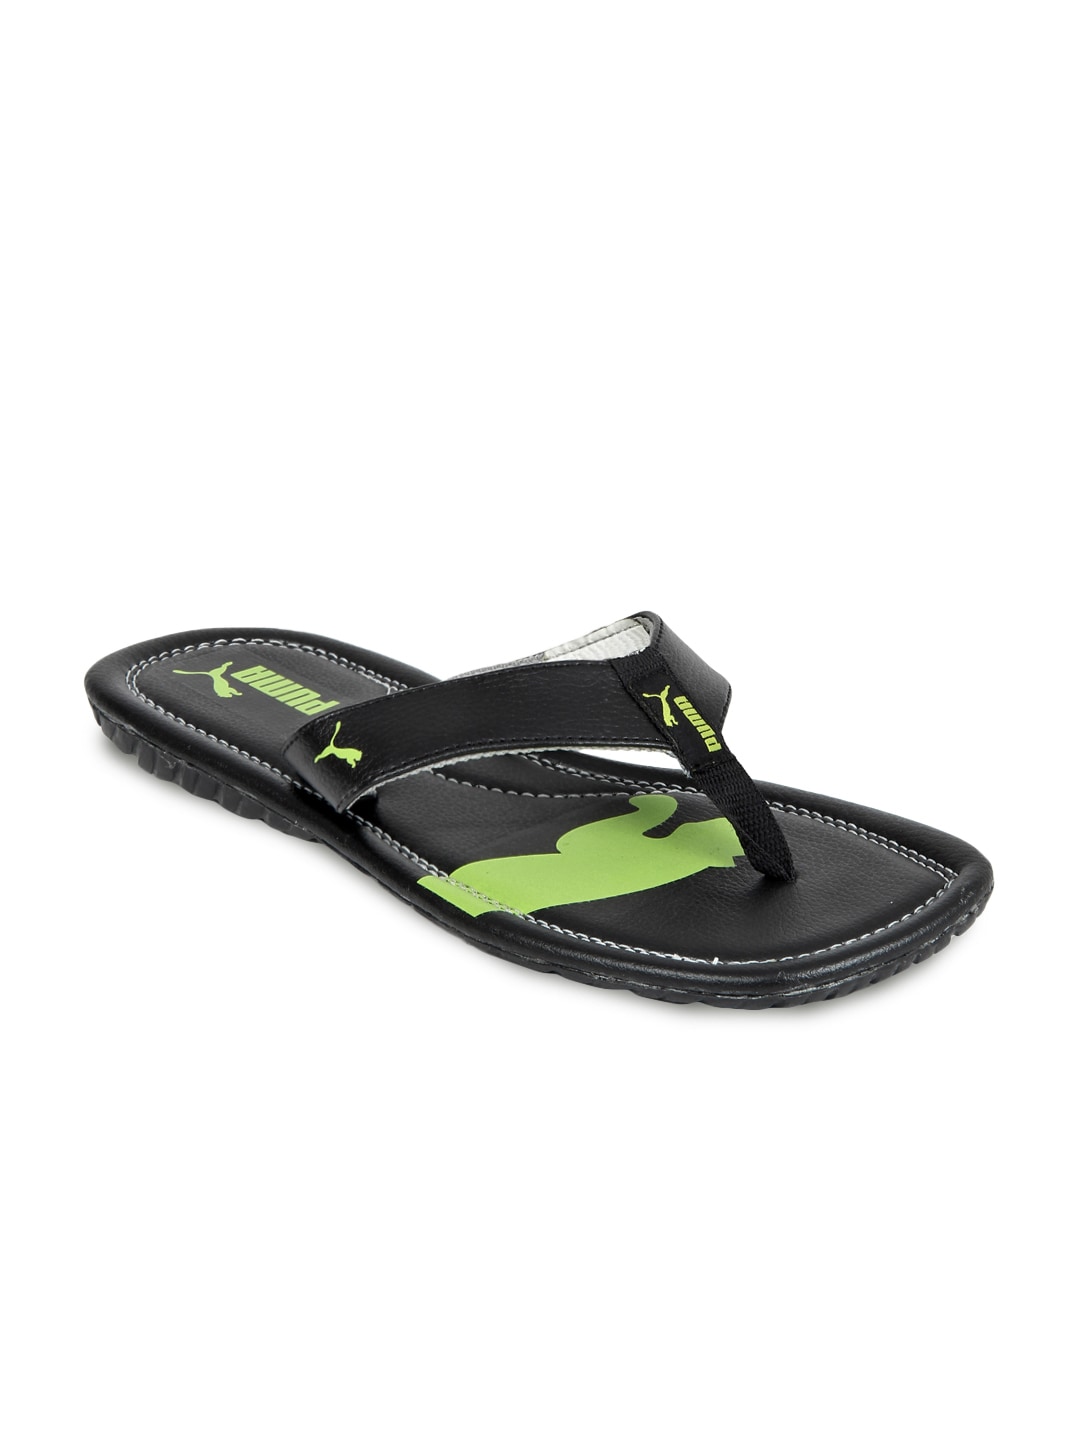 puma sandals lowest price online off 65 